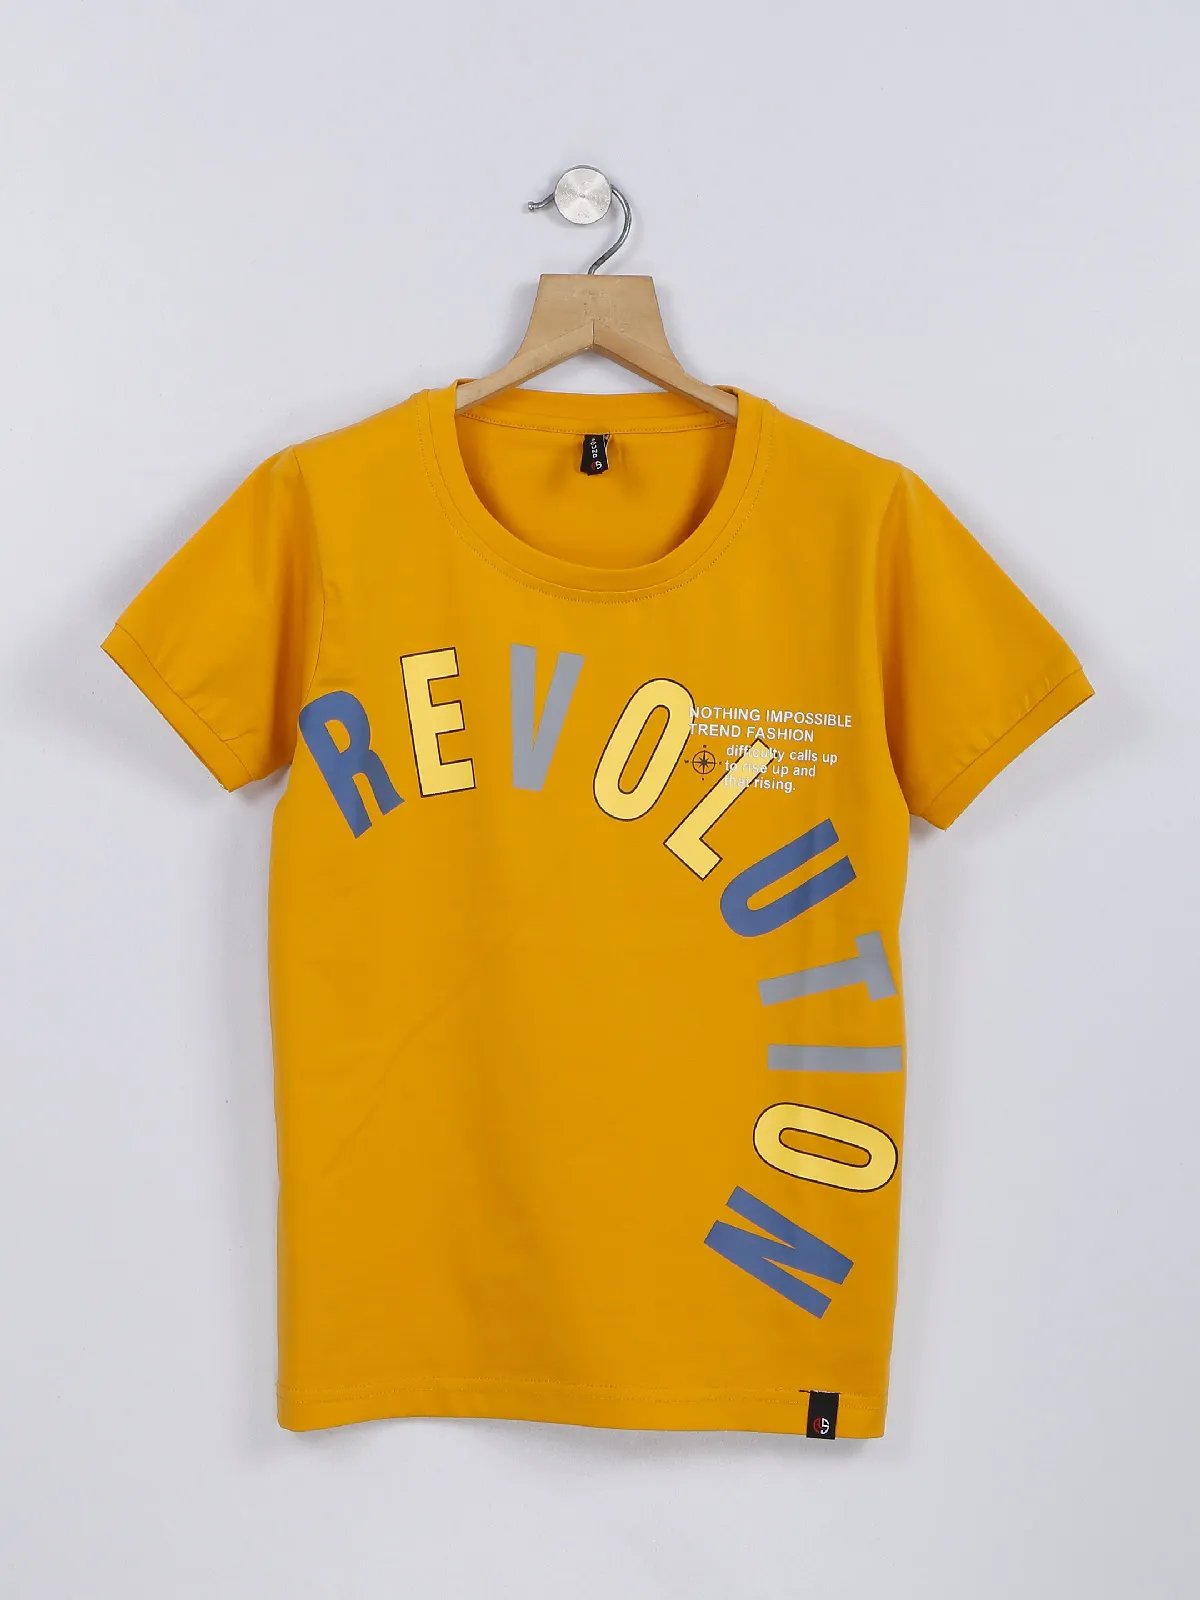 Red Sound mustard yellow printed t shirt